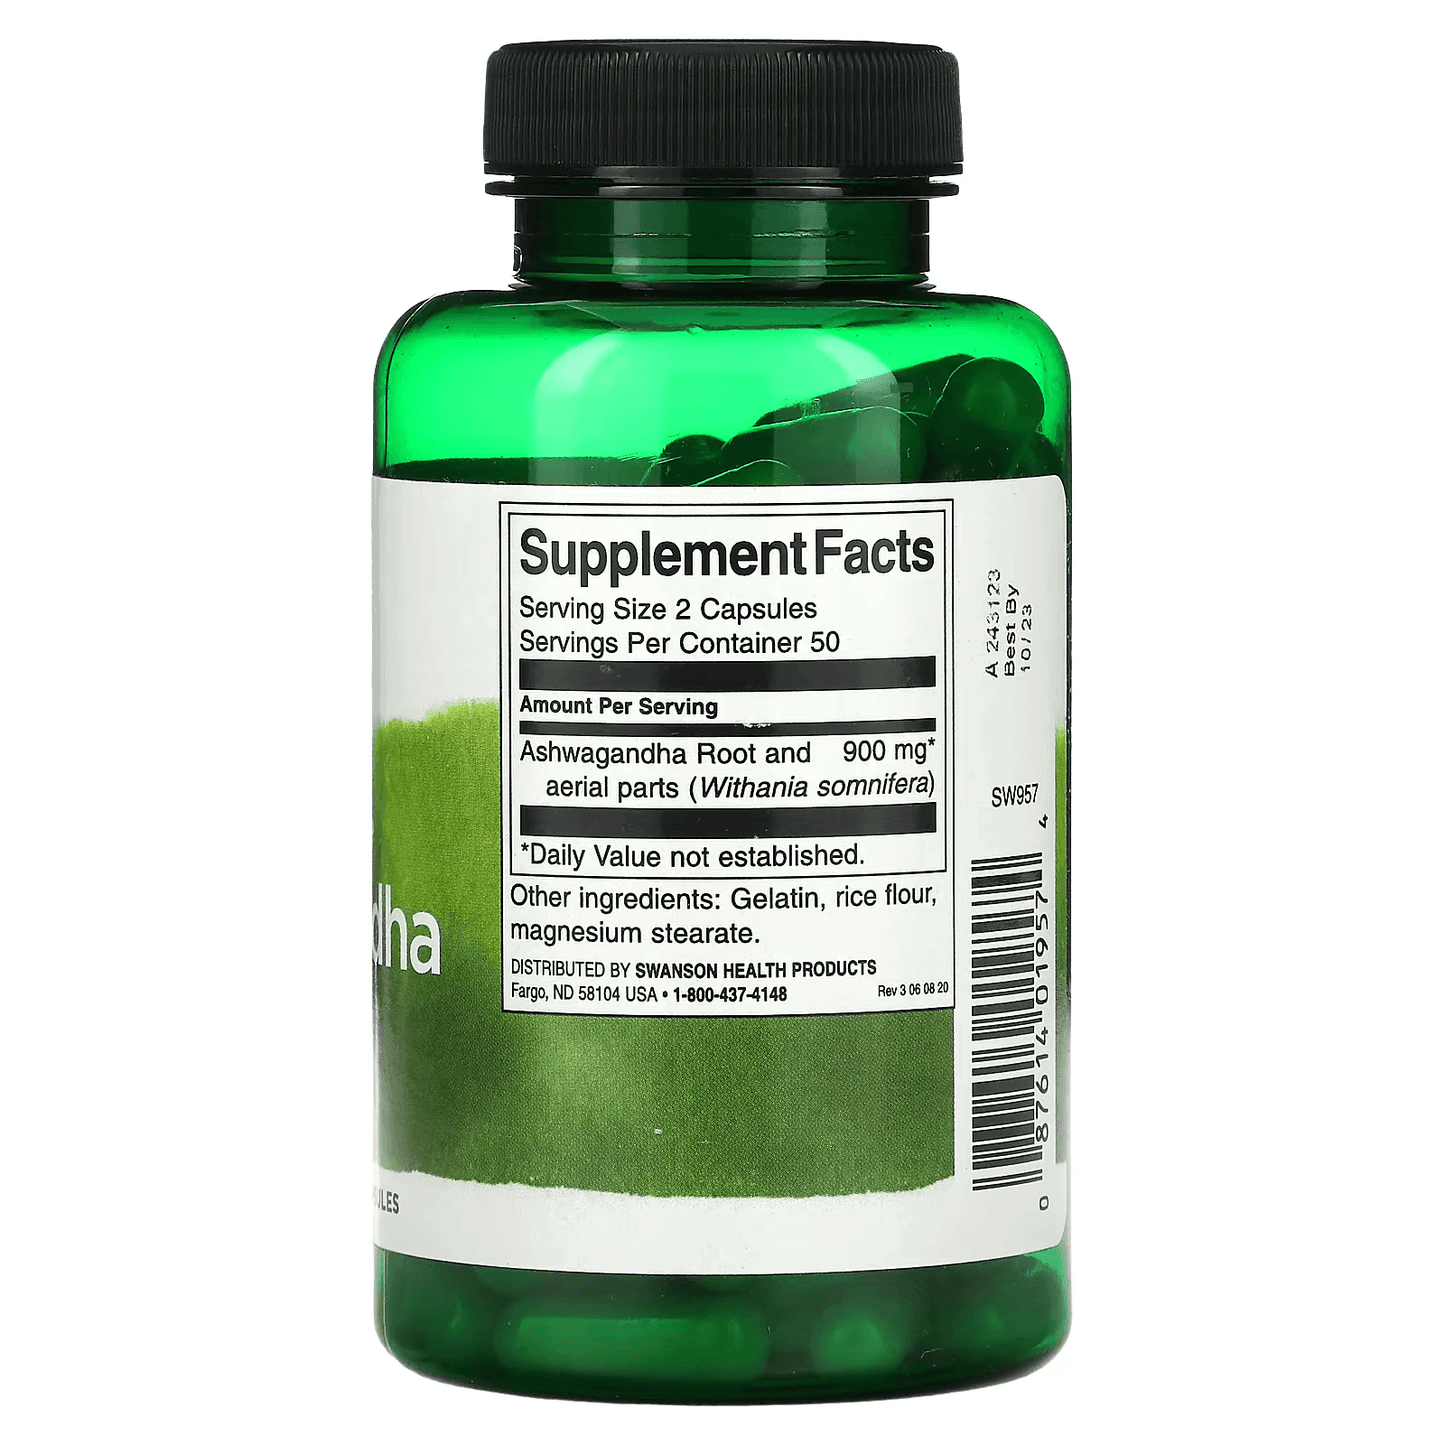 Full Spectrum Ashwaganda - The Supplements Factory